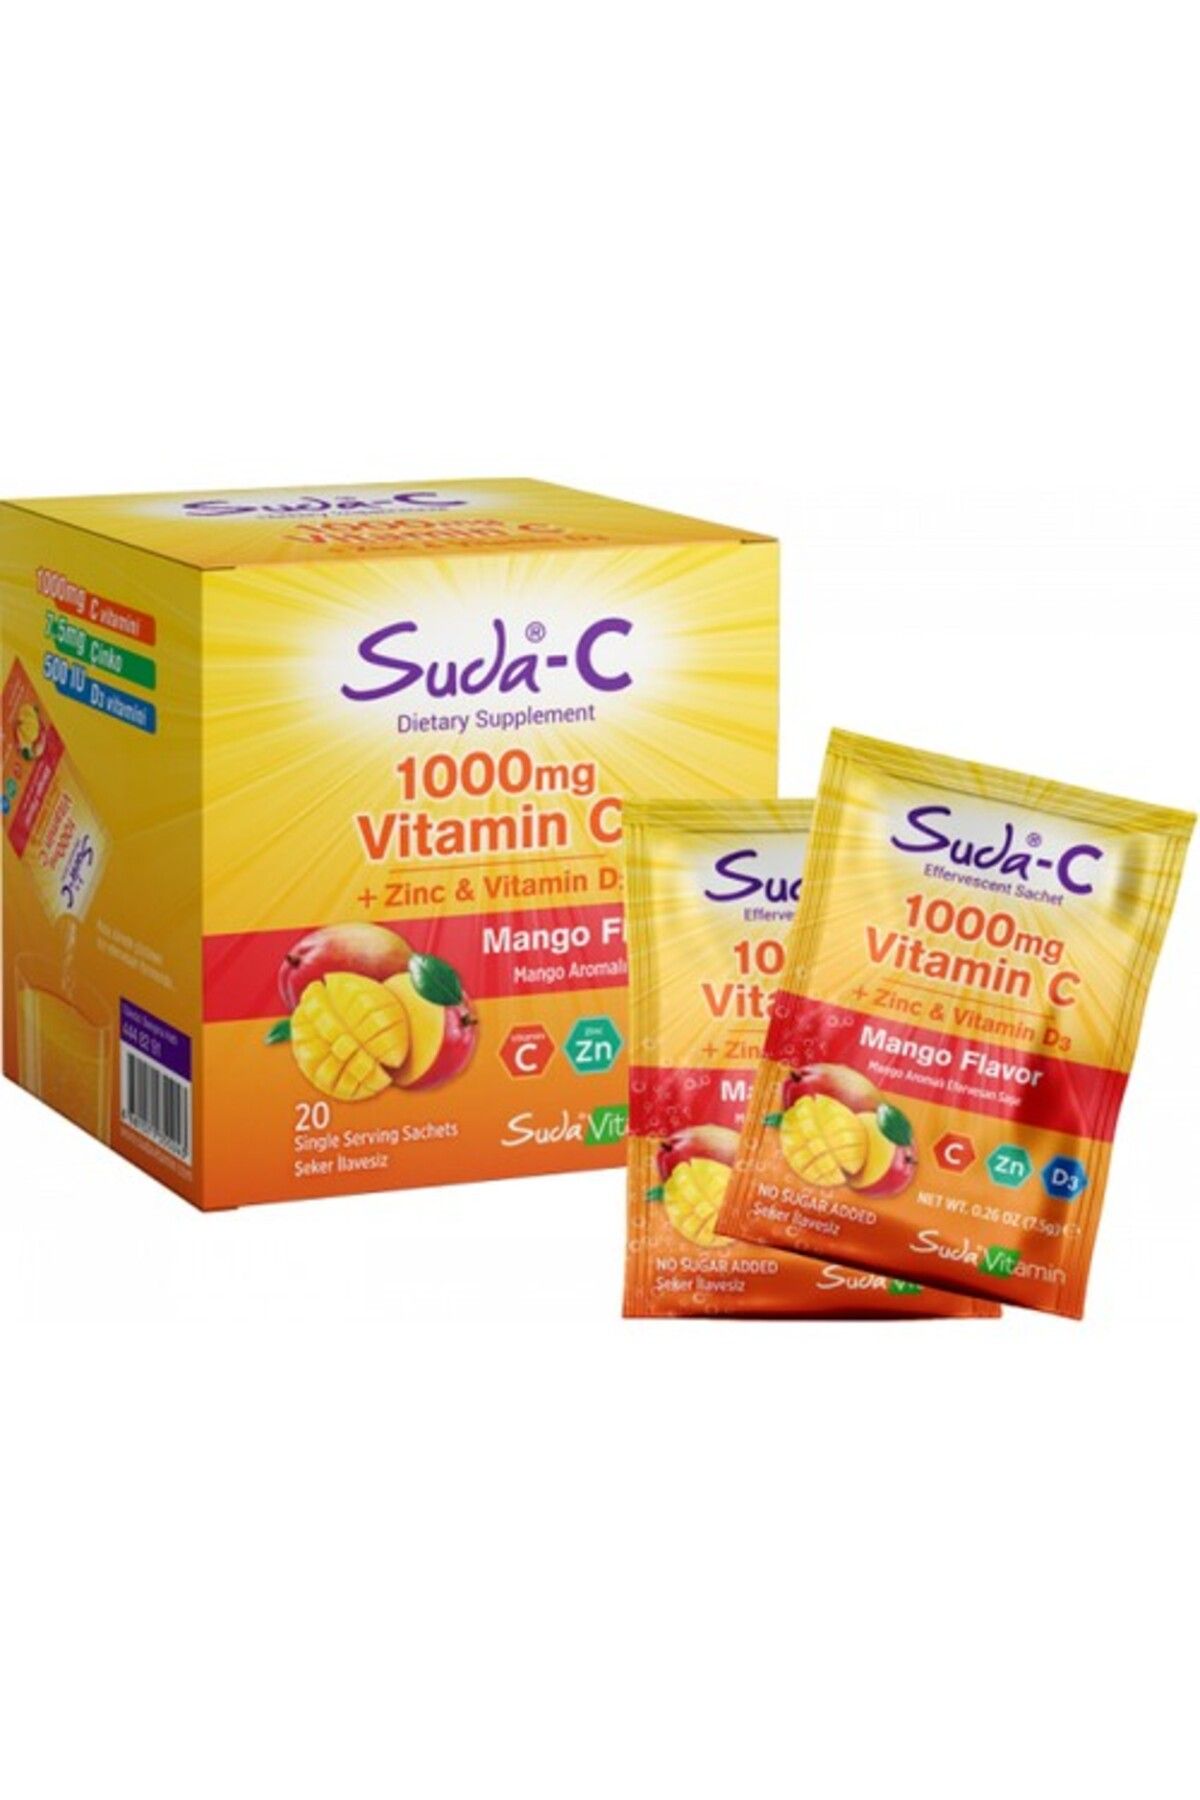 Suda Care Suda Vitamin Suda-c Mango Flavor 20 Sachet